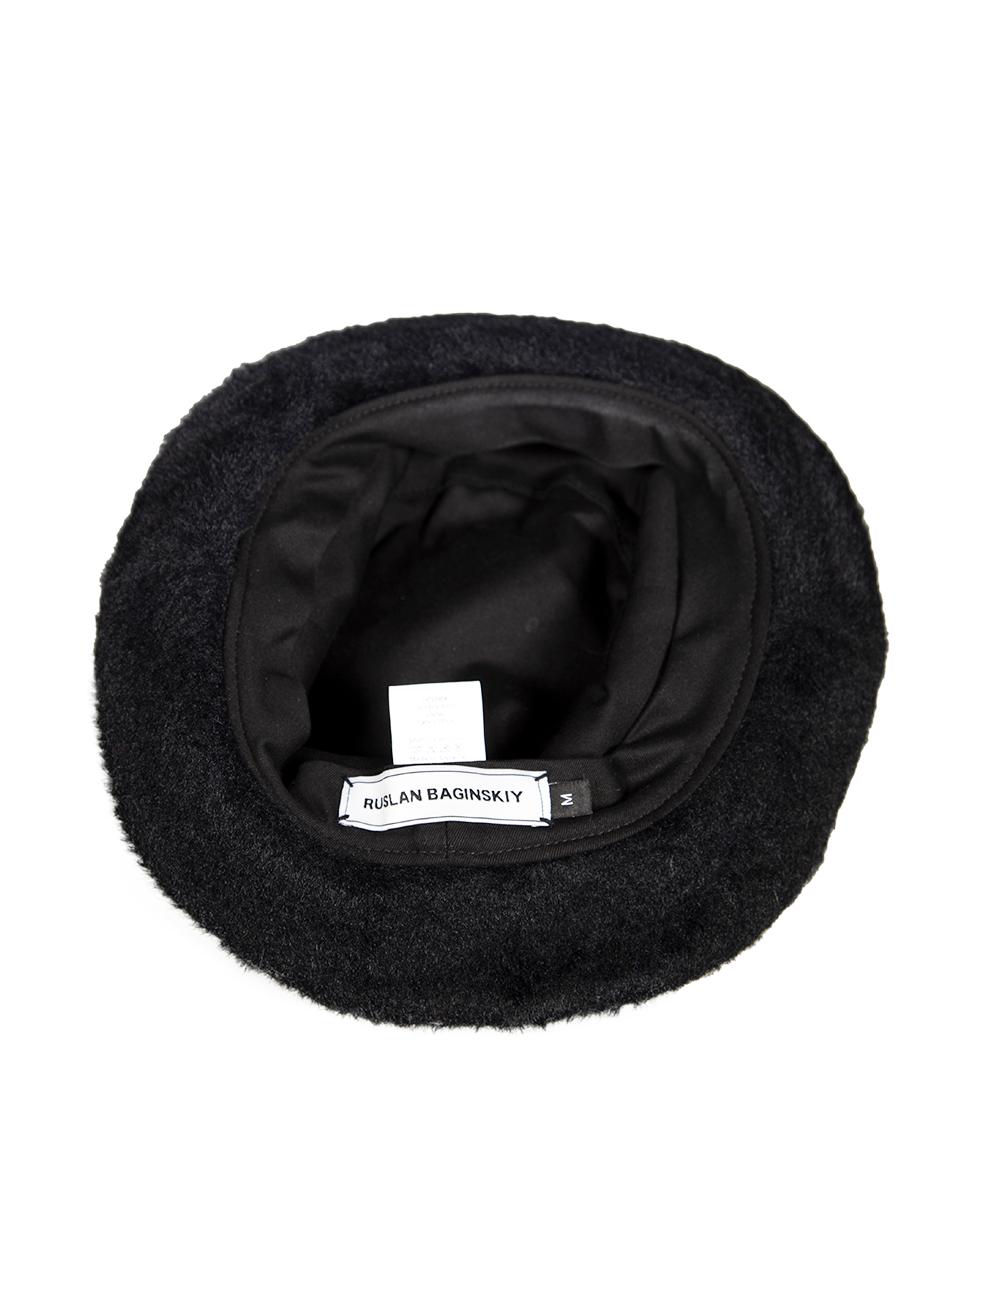 Women's Ruslan Baginskiy Black Bucket Hat For Sale